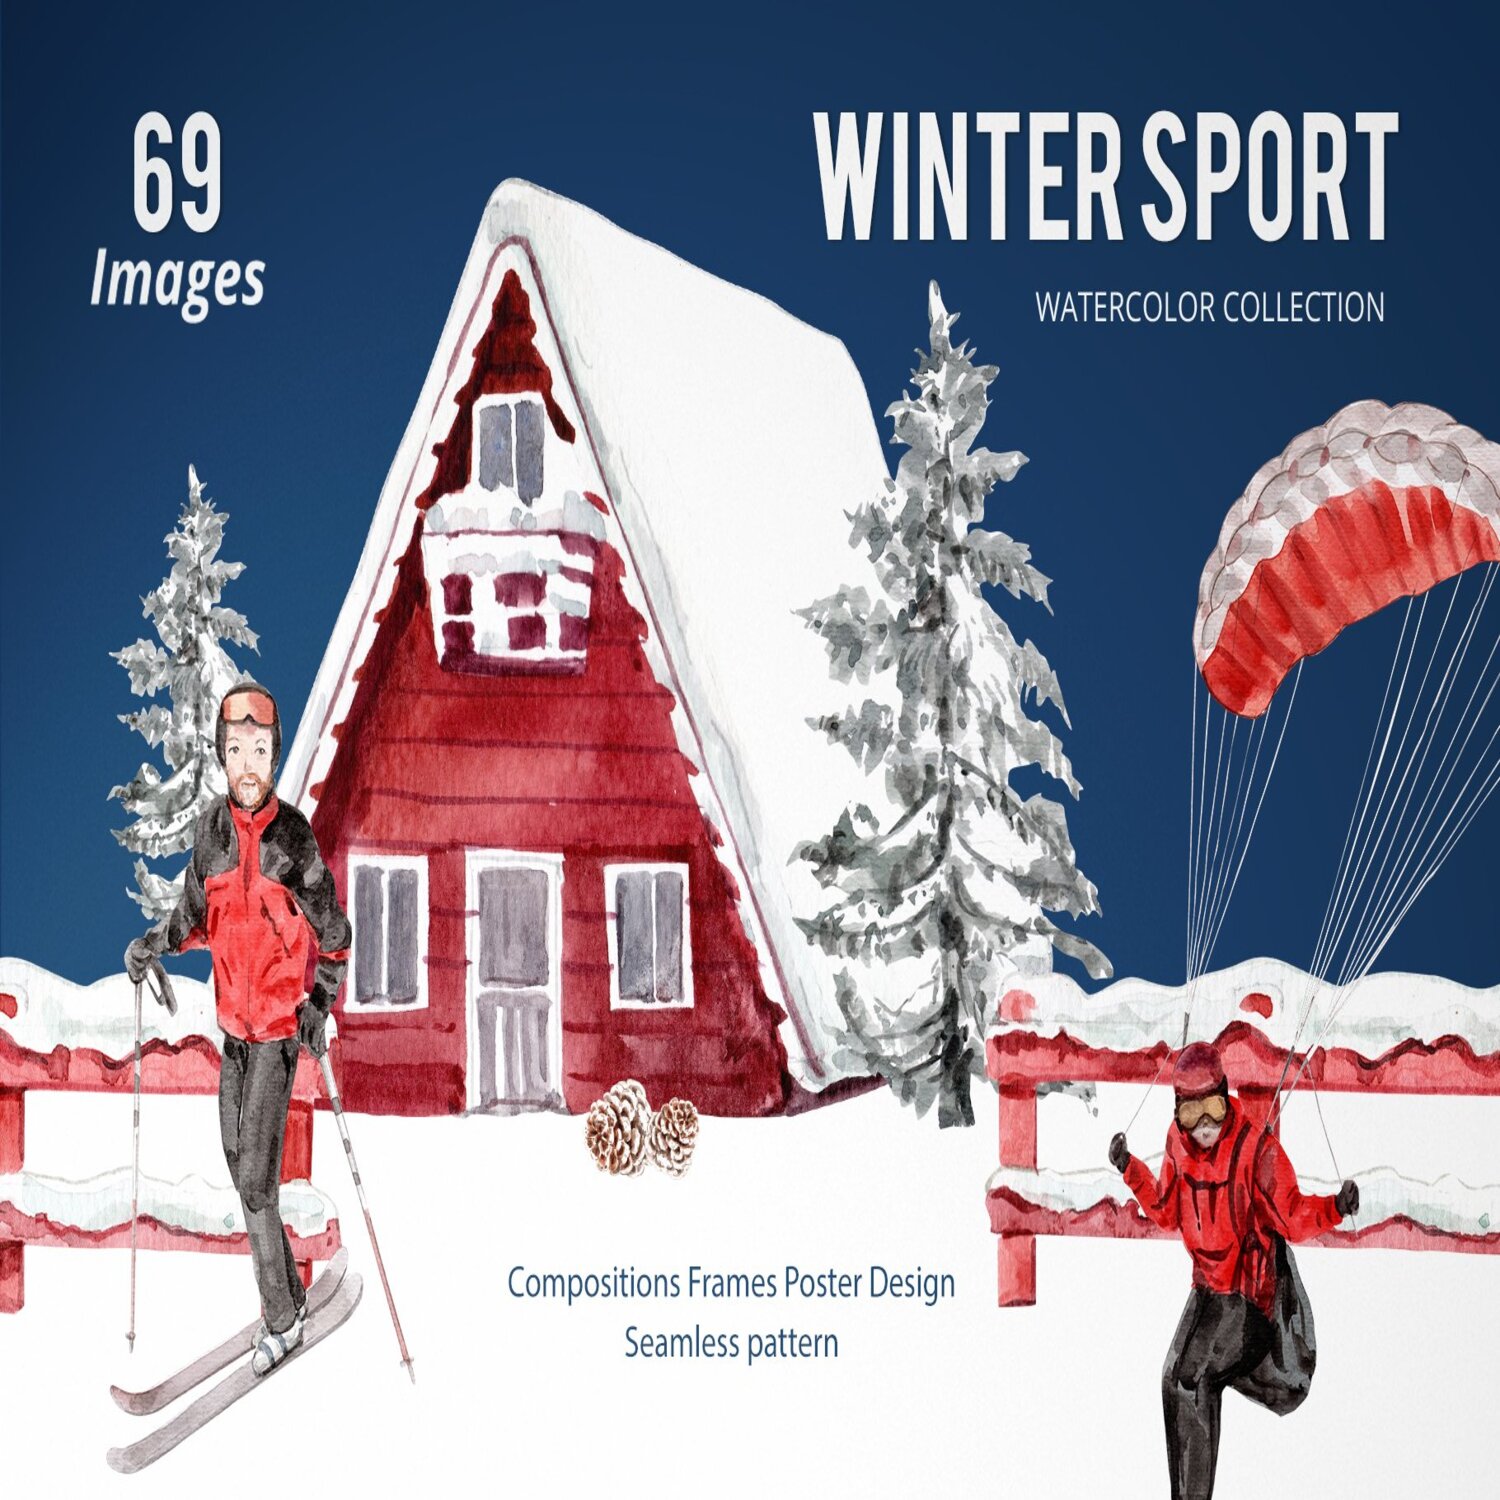 Winter Sports Watercolor cover.